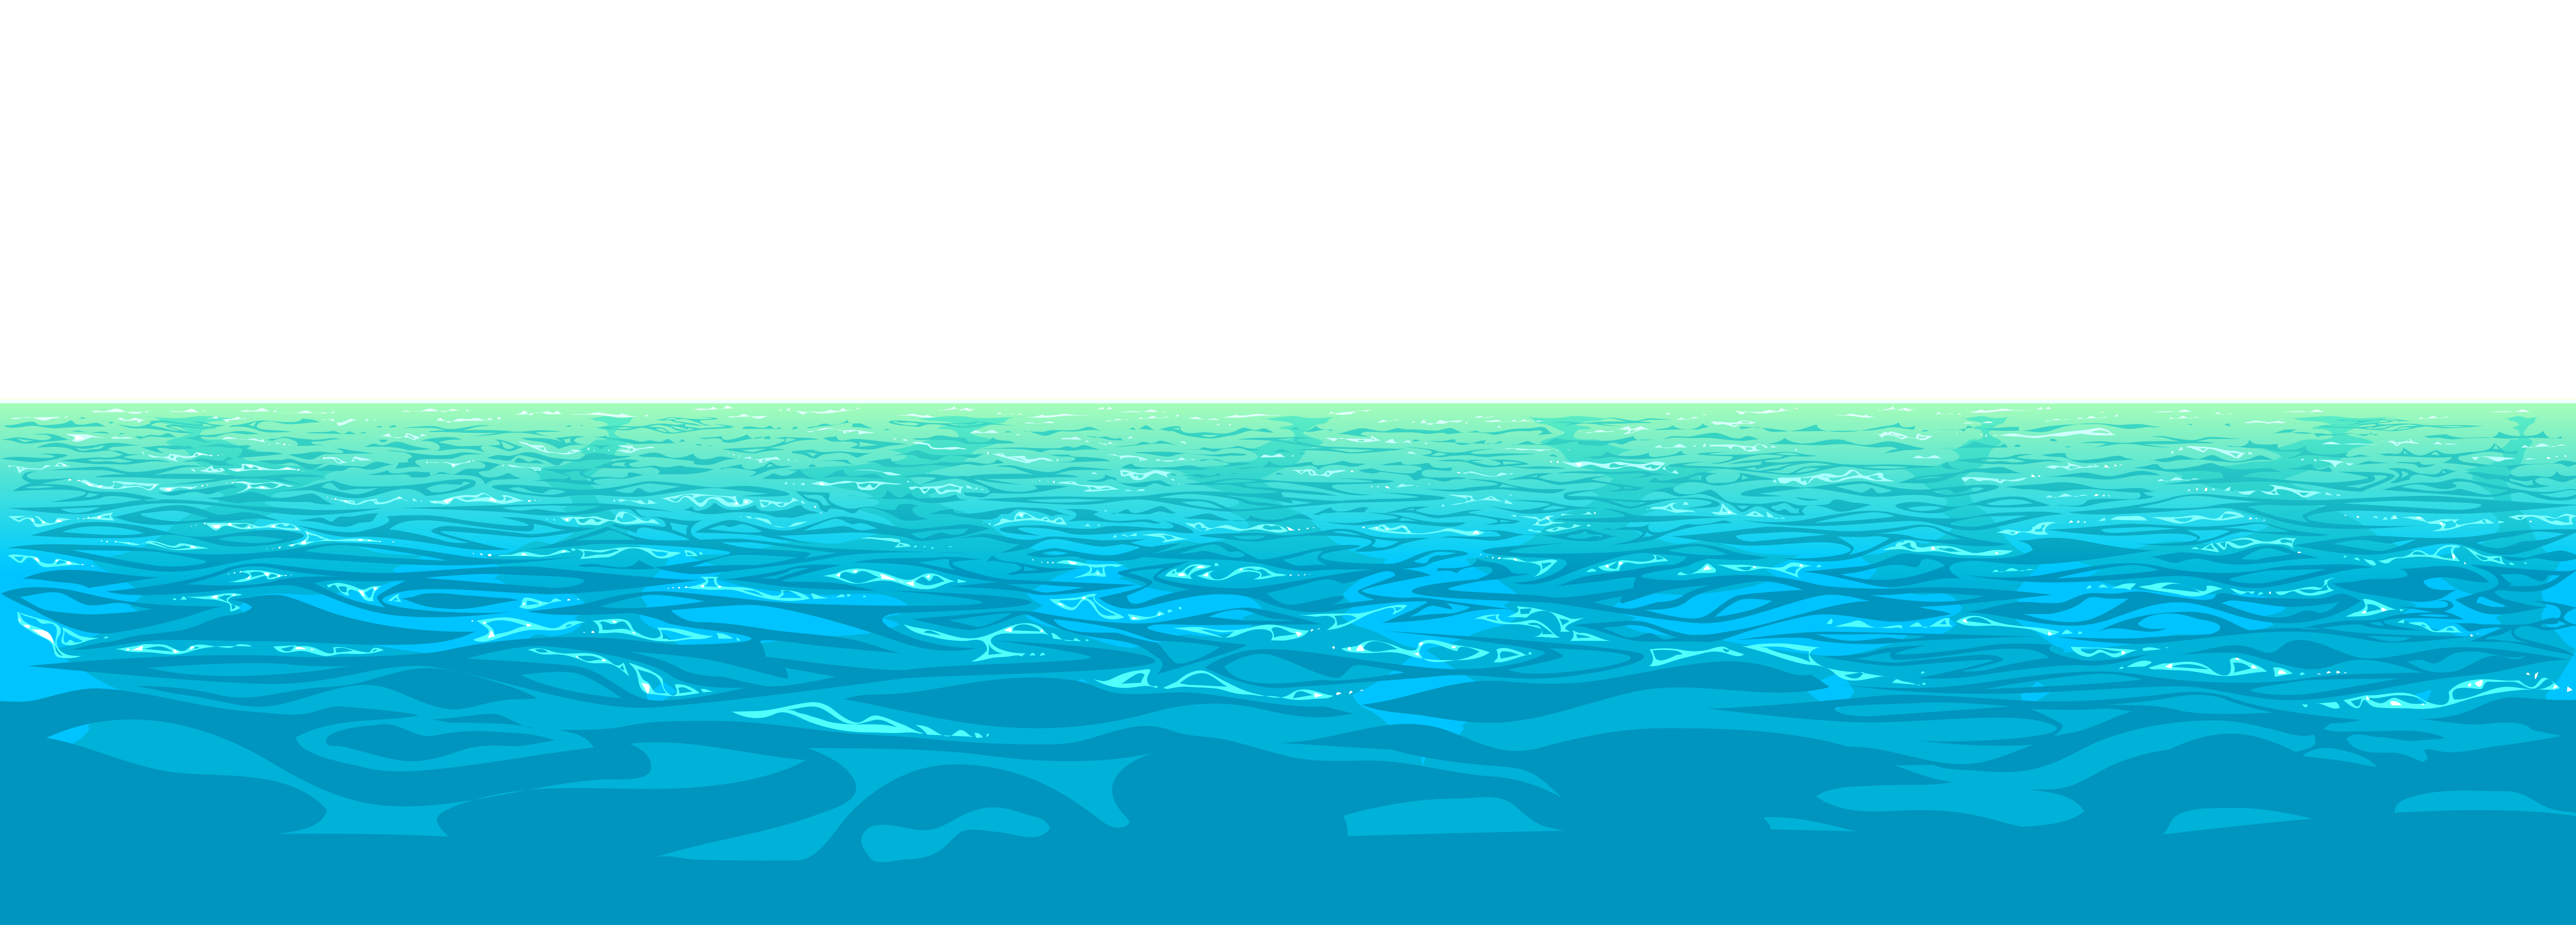 Free Sea Background Cliparts, Download Free Sea Background Cliparts png